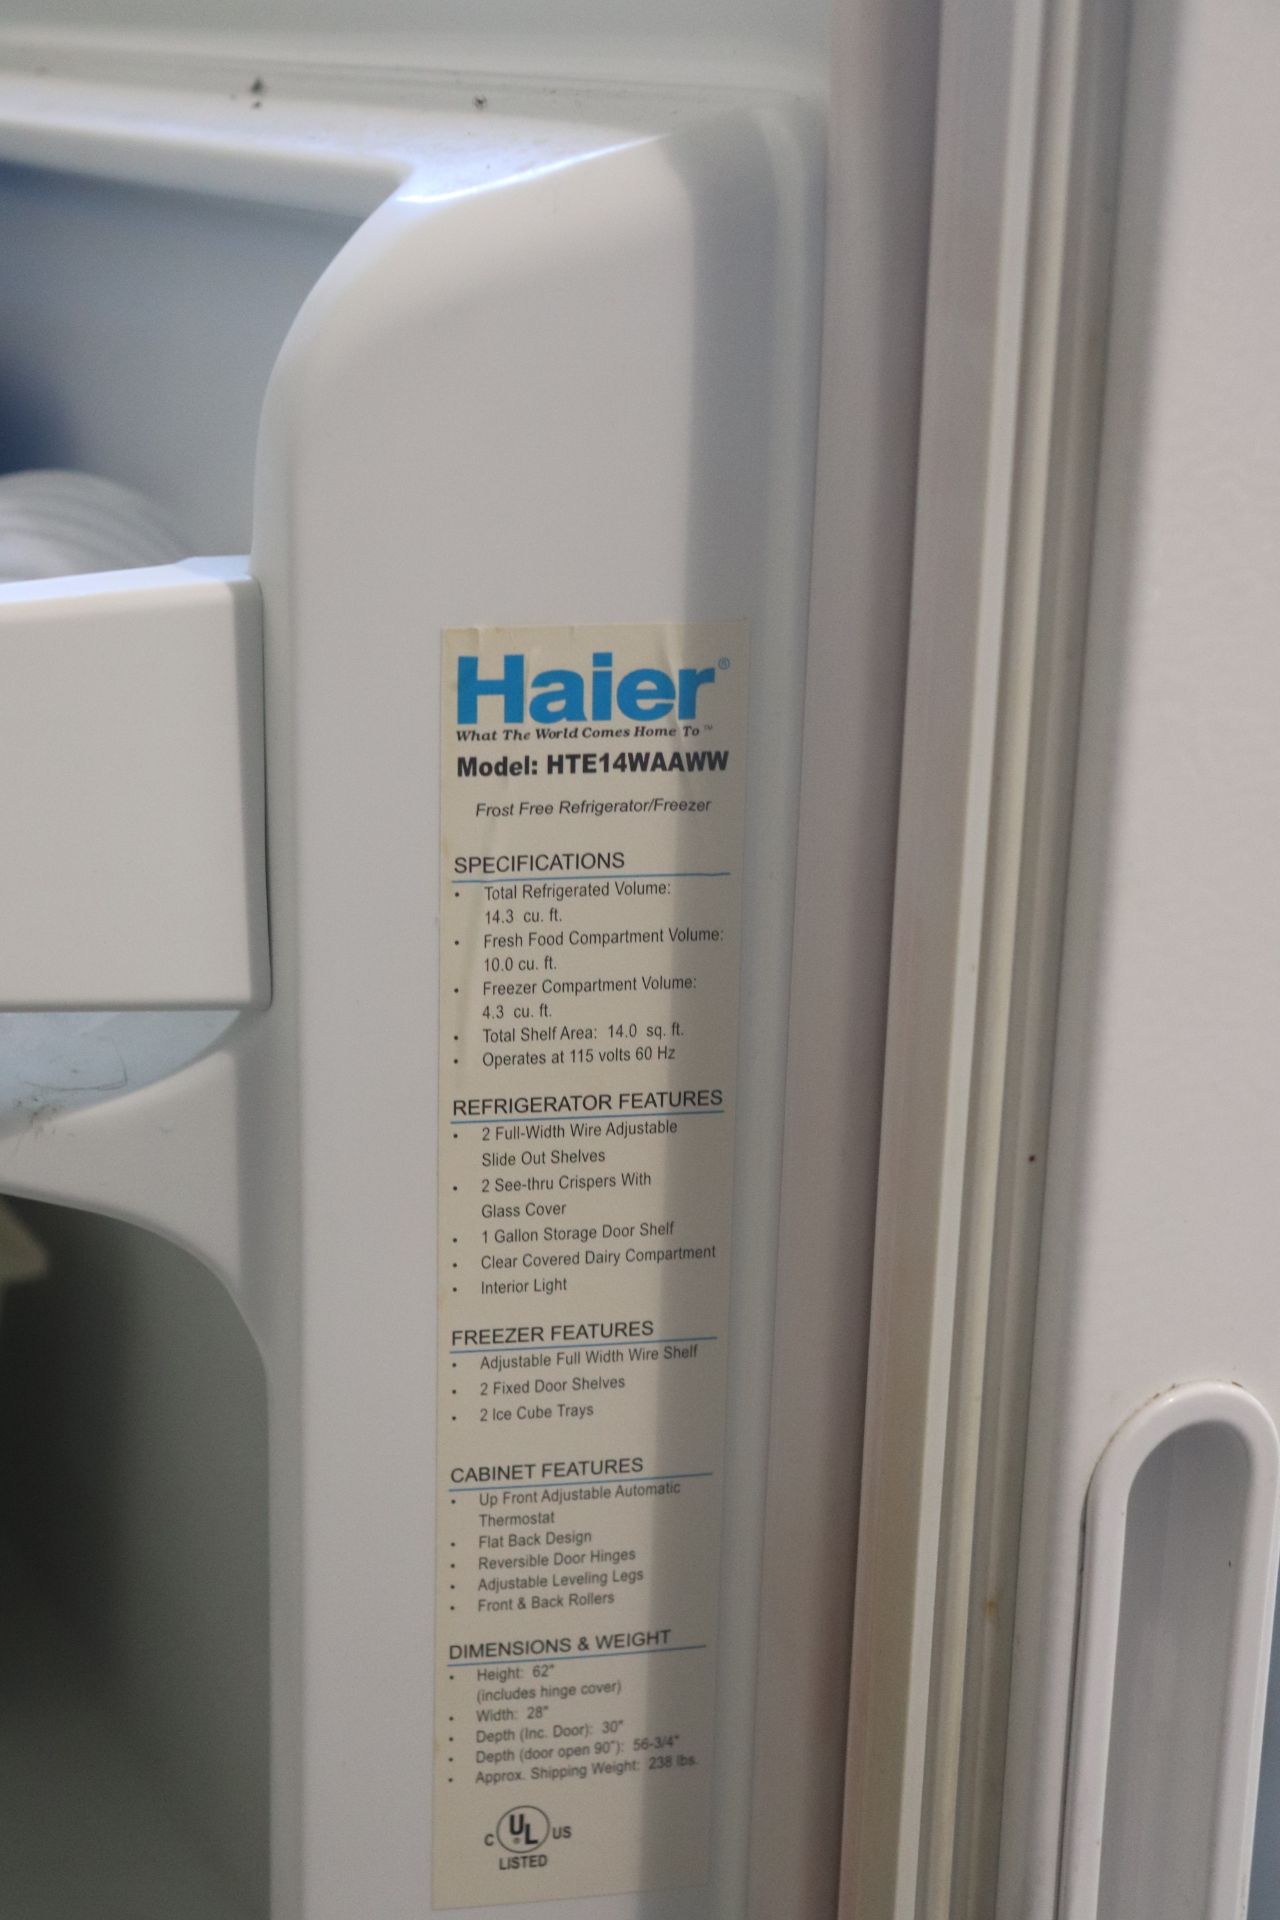 Haier model HTE14 residential refrigerator - Image 2 of 3